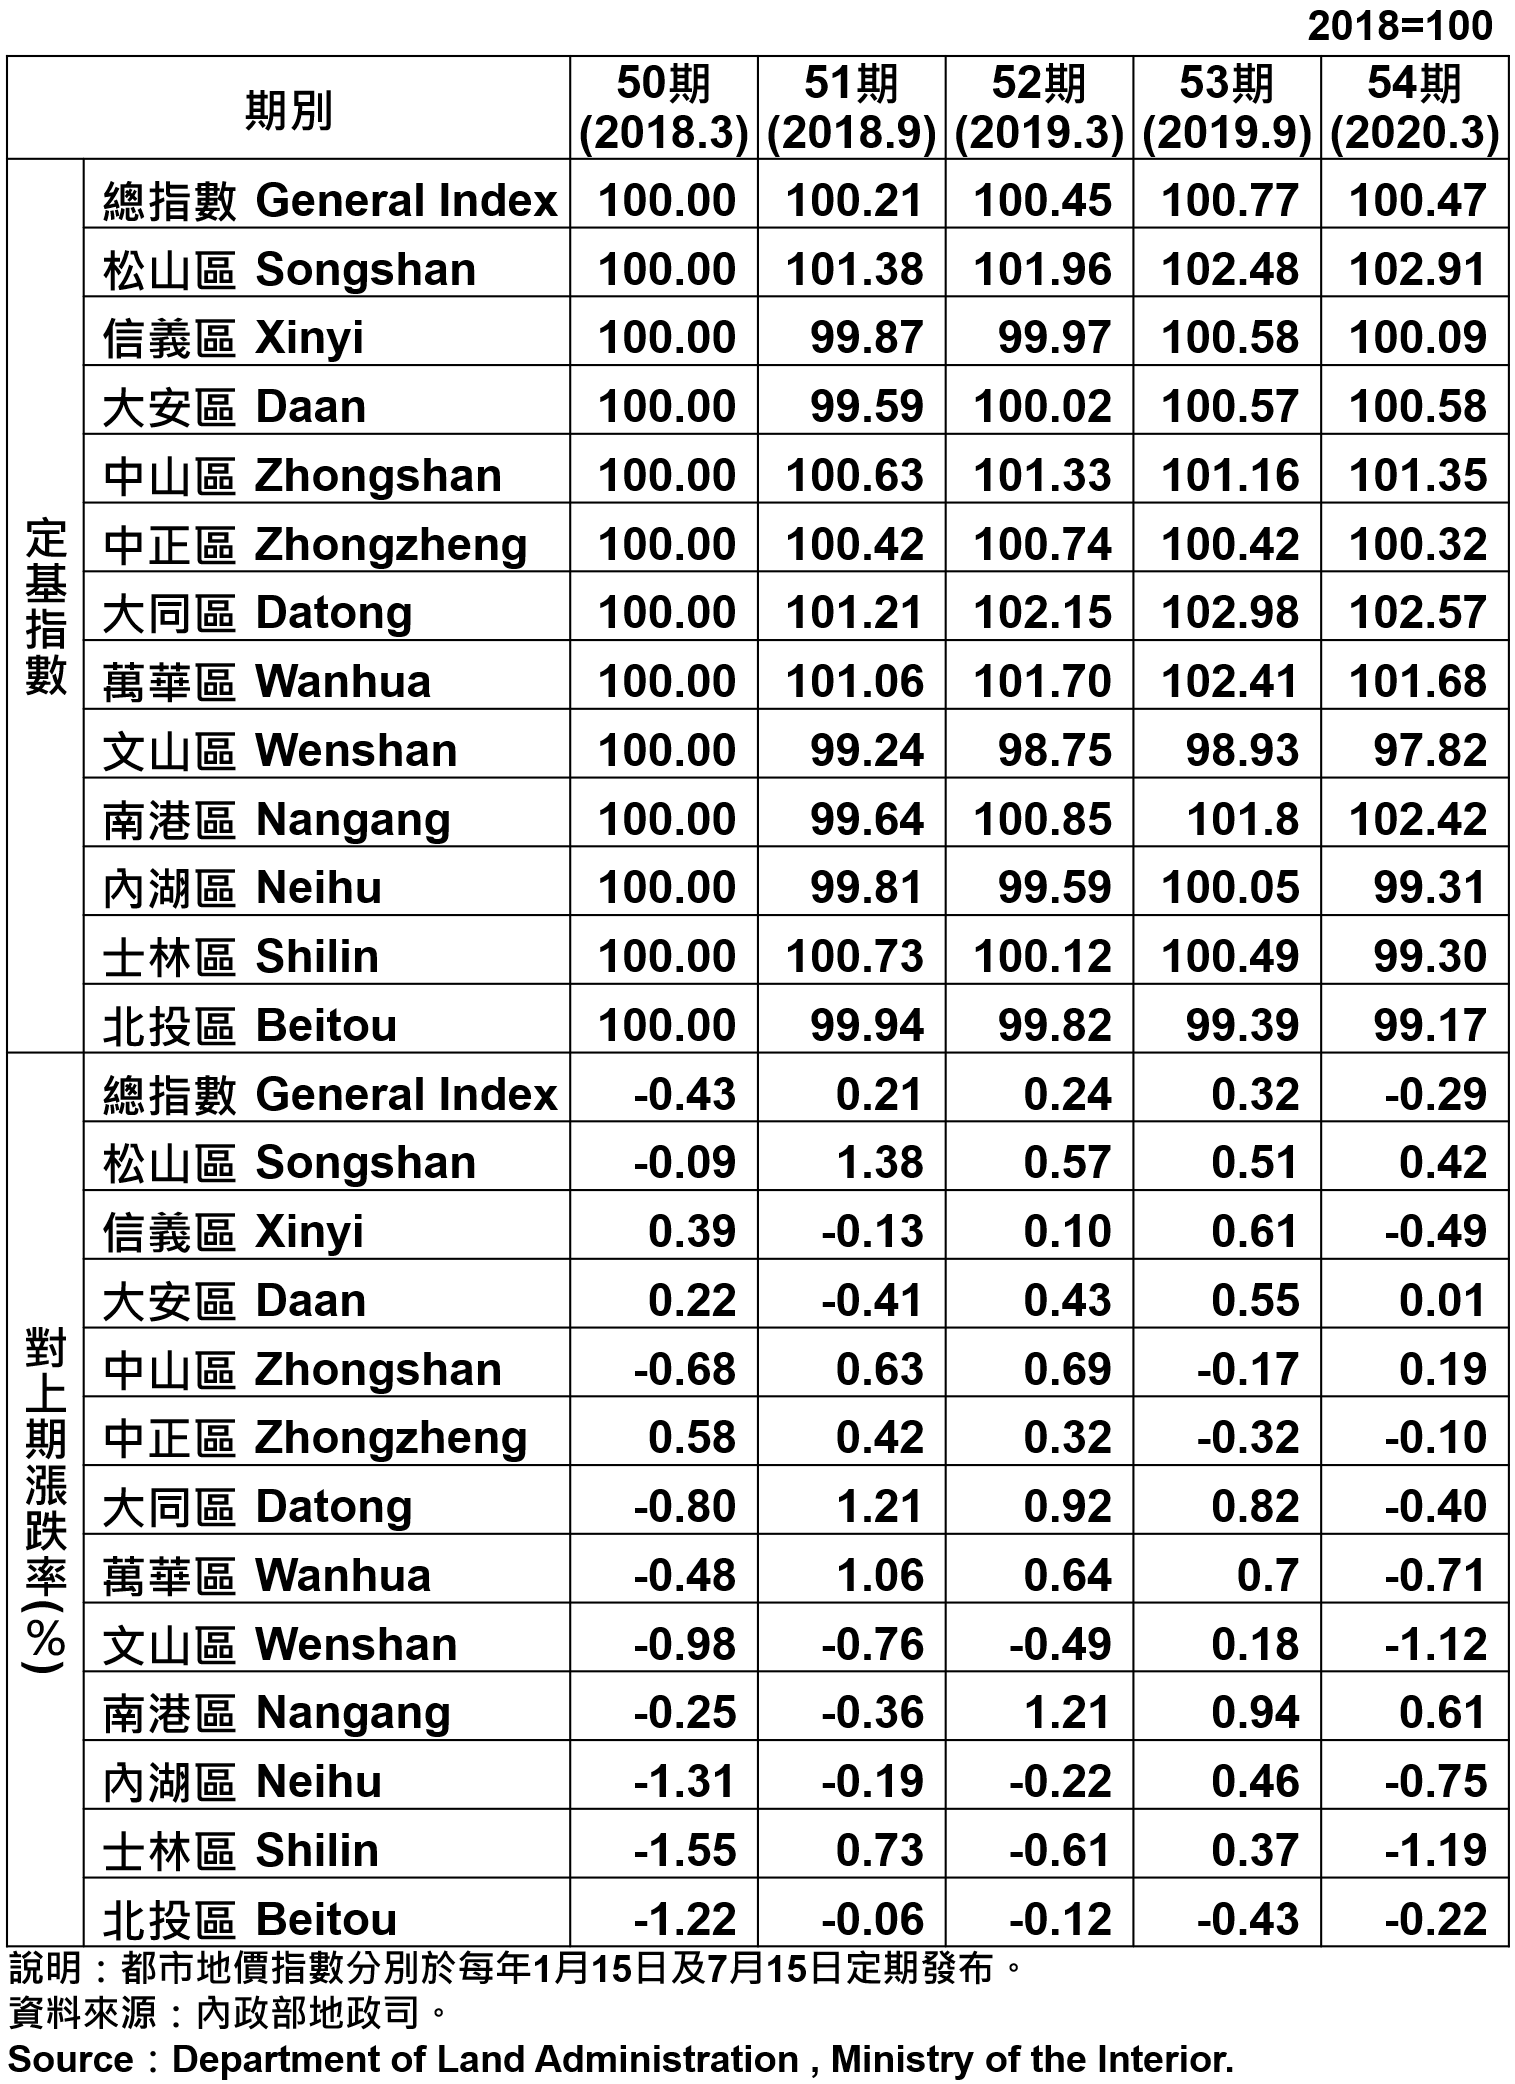 臺北市都市地價指數分區表—54期 Taipei's Urban Land Price Indexes by Districts—54th